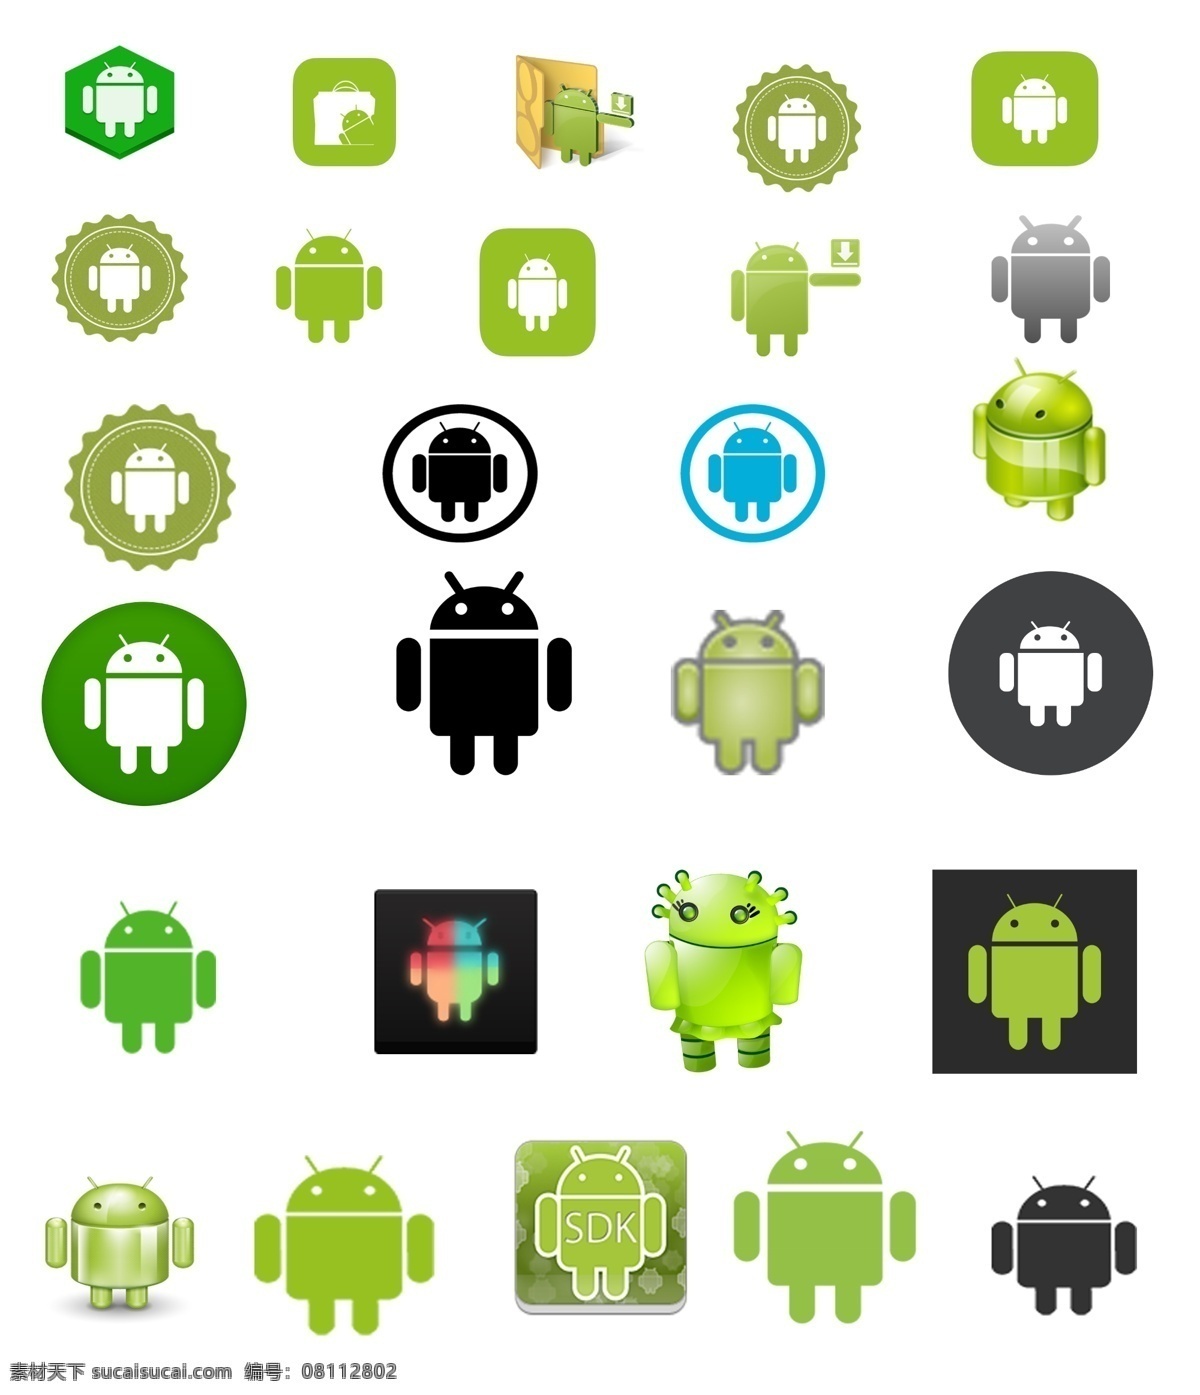 android 图标 logo logo图标 分层 标识 标识标志图标 标志logo 模板下载 安卓 机器人 企业 标志 源文件 矢量图 其他矢量图